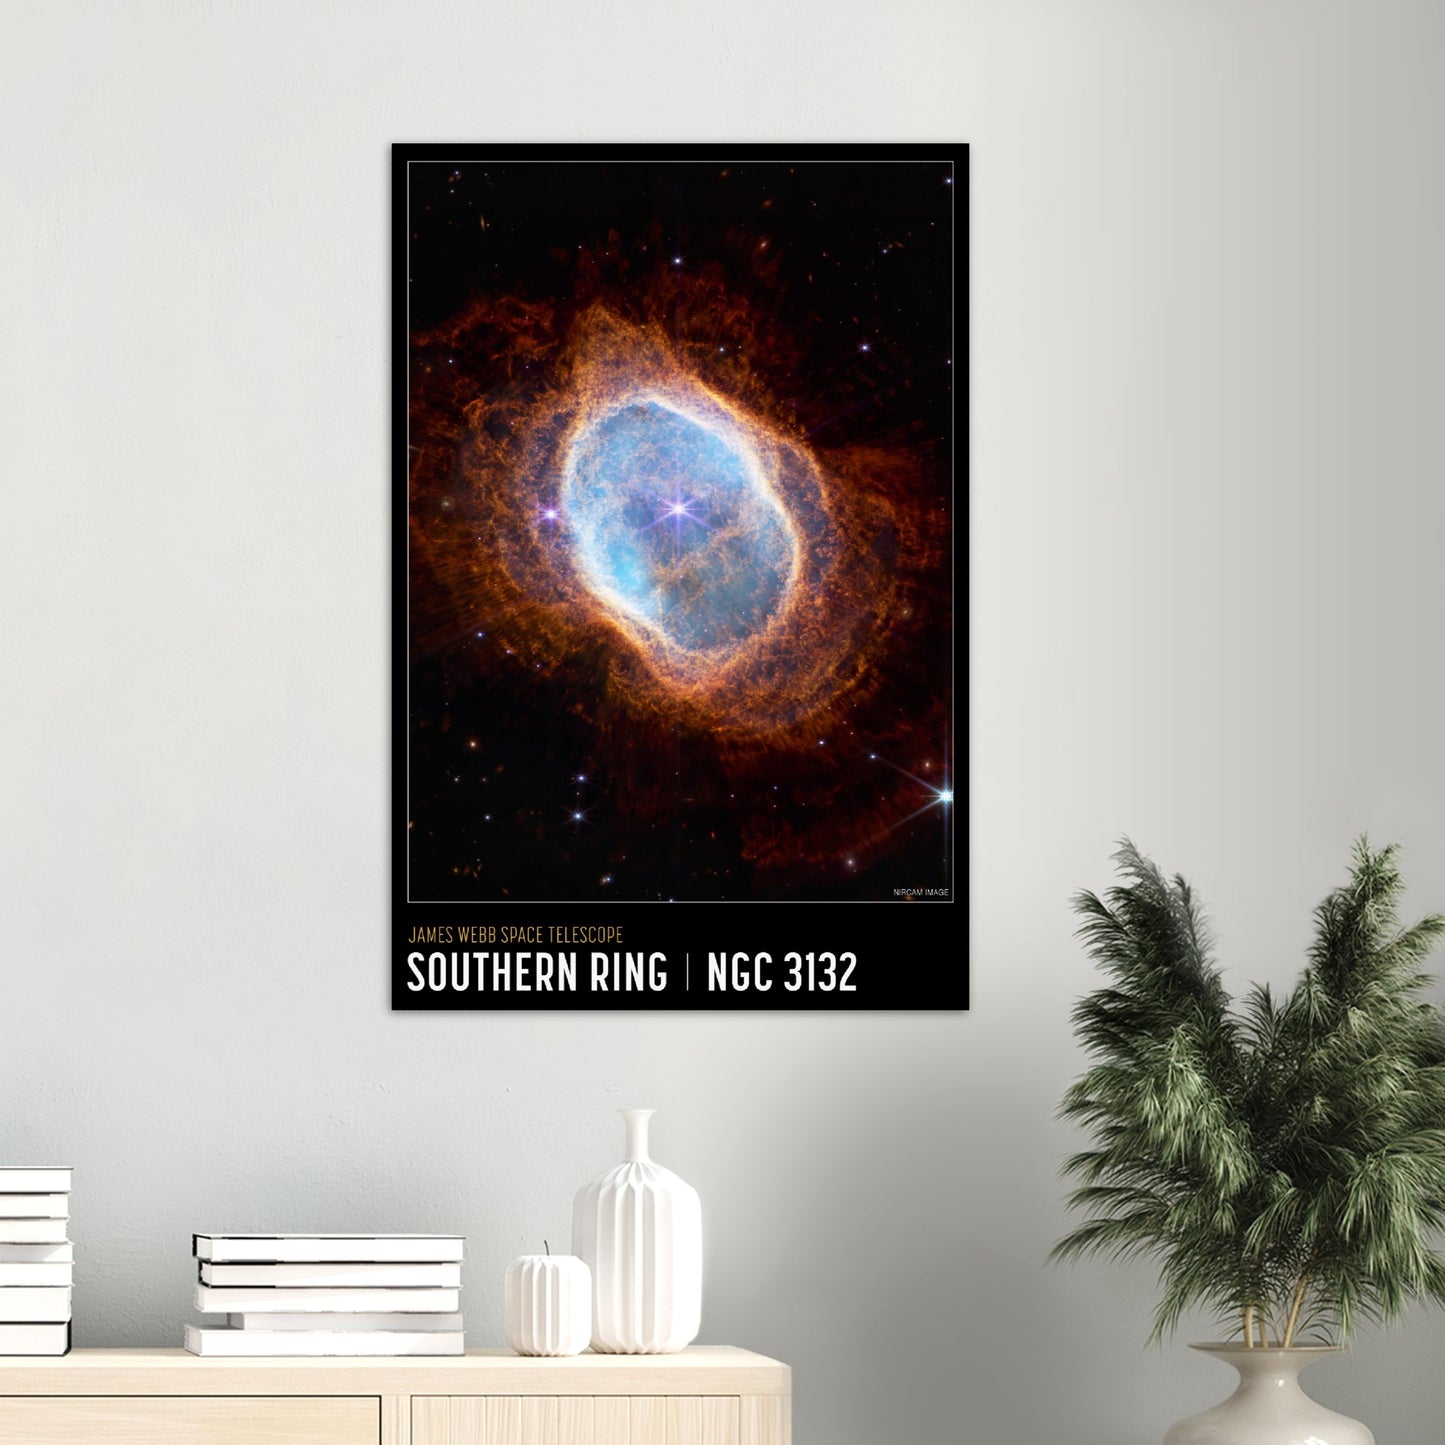 NASA Poster - Southern Ring Nebula Poster from NASA's James Webb Space Telescope